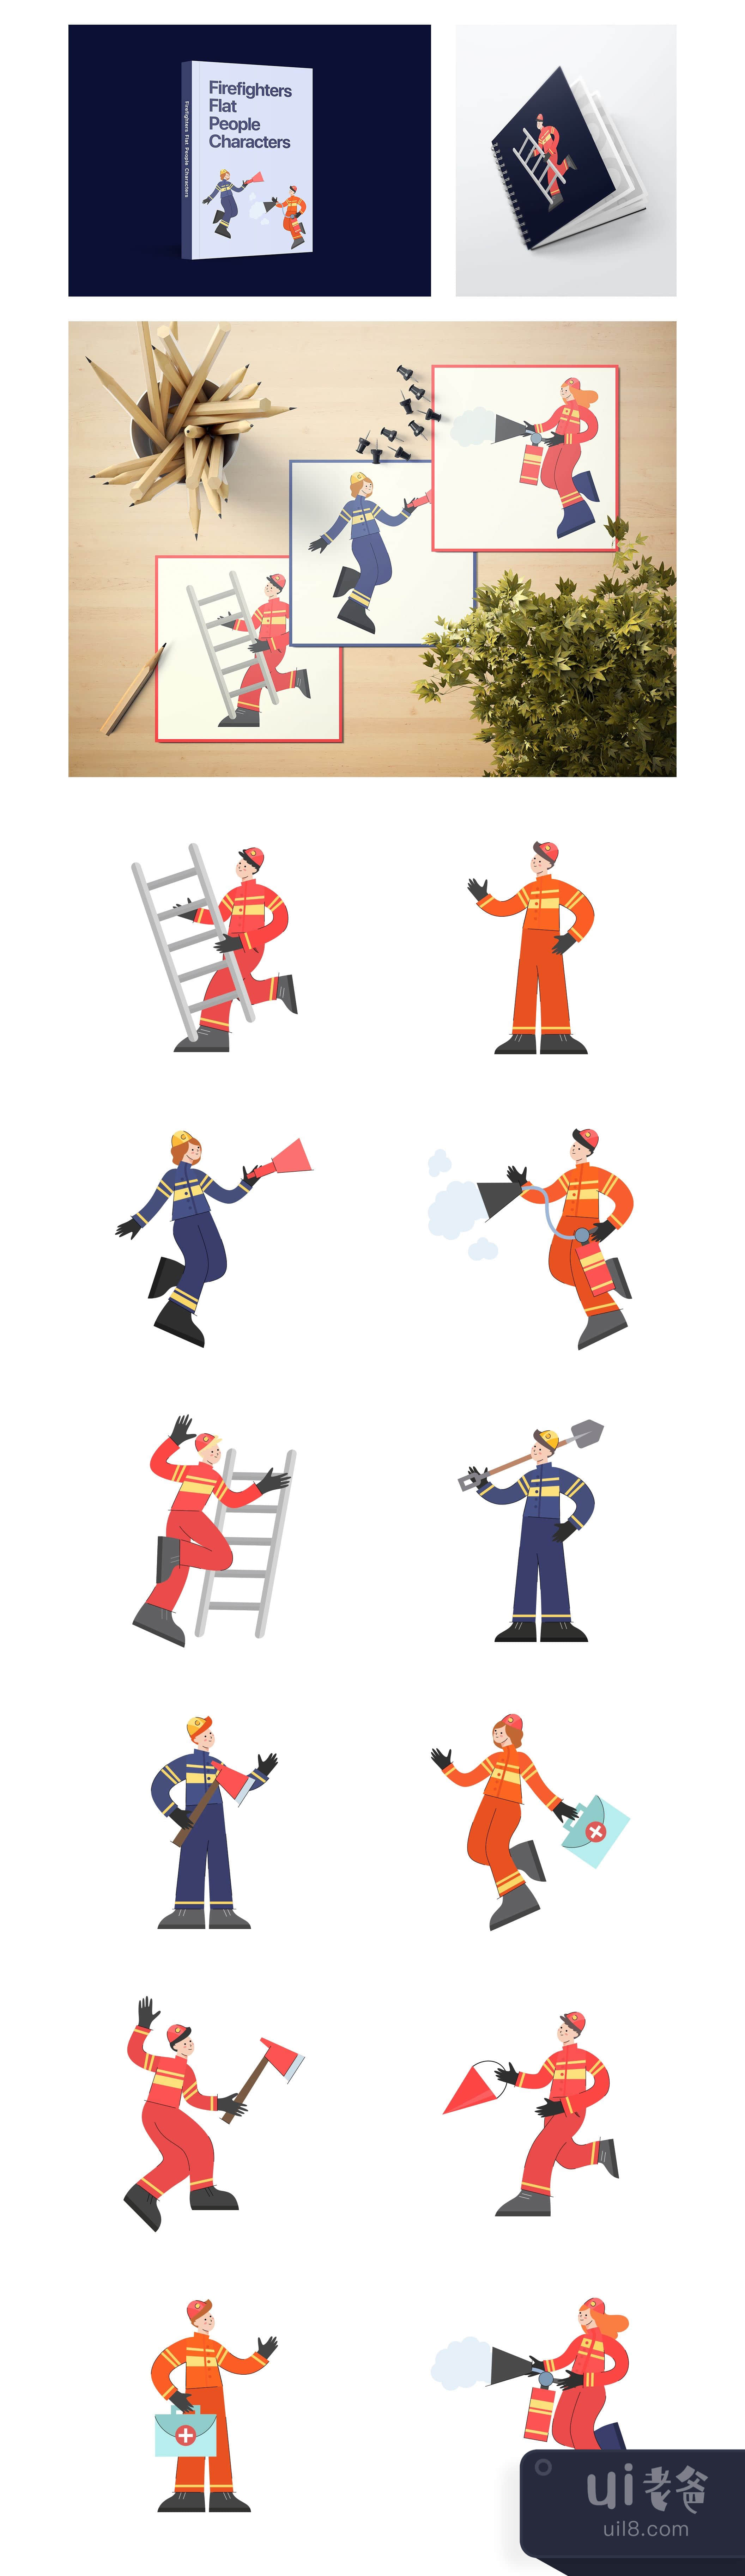 消防员平面人物形象 (Firefighters Flat People Characters)插图